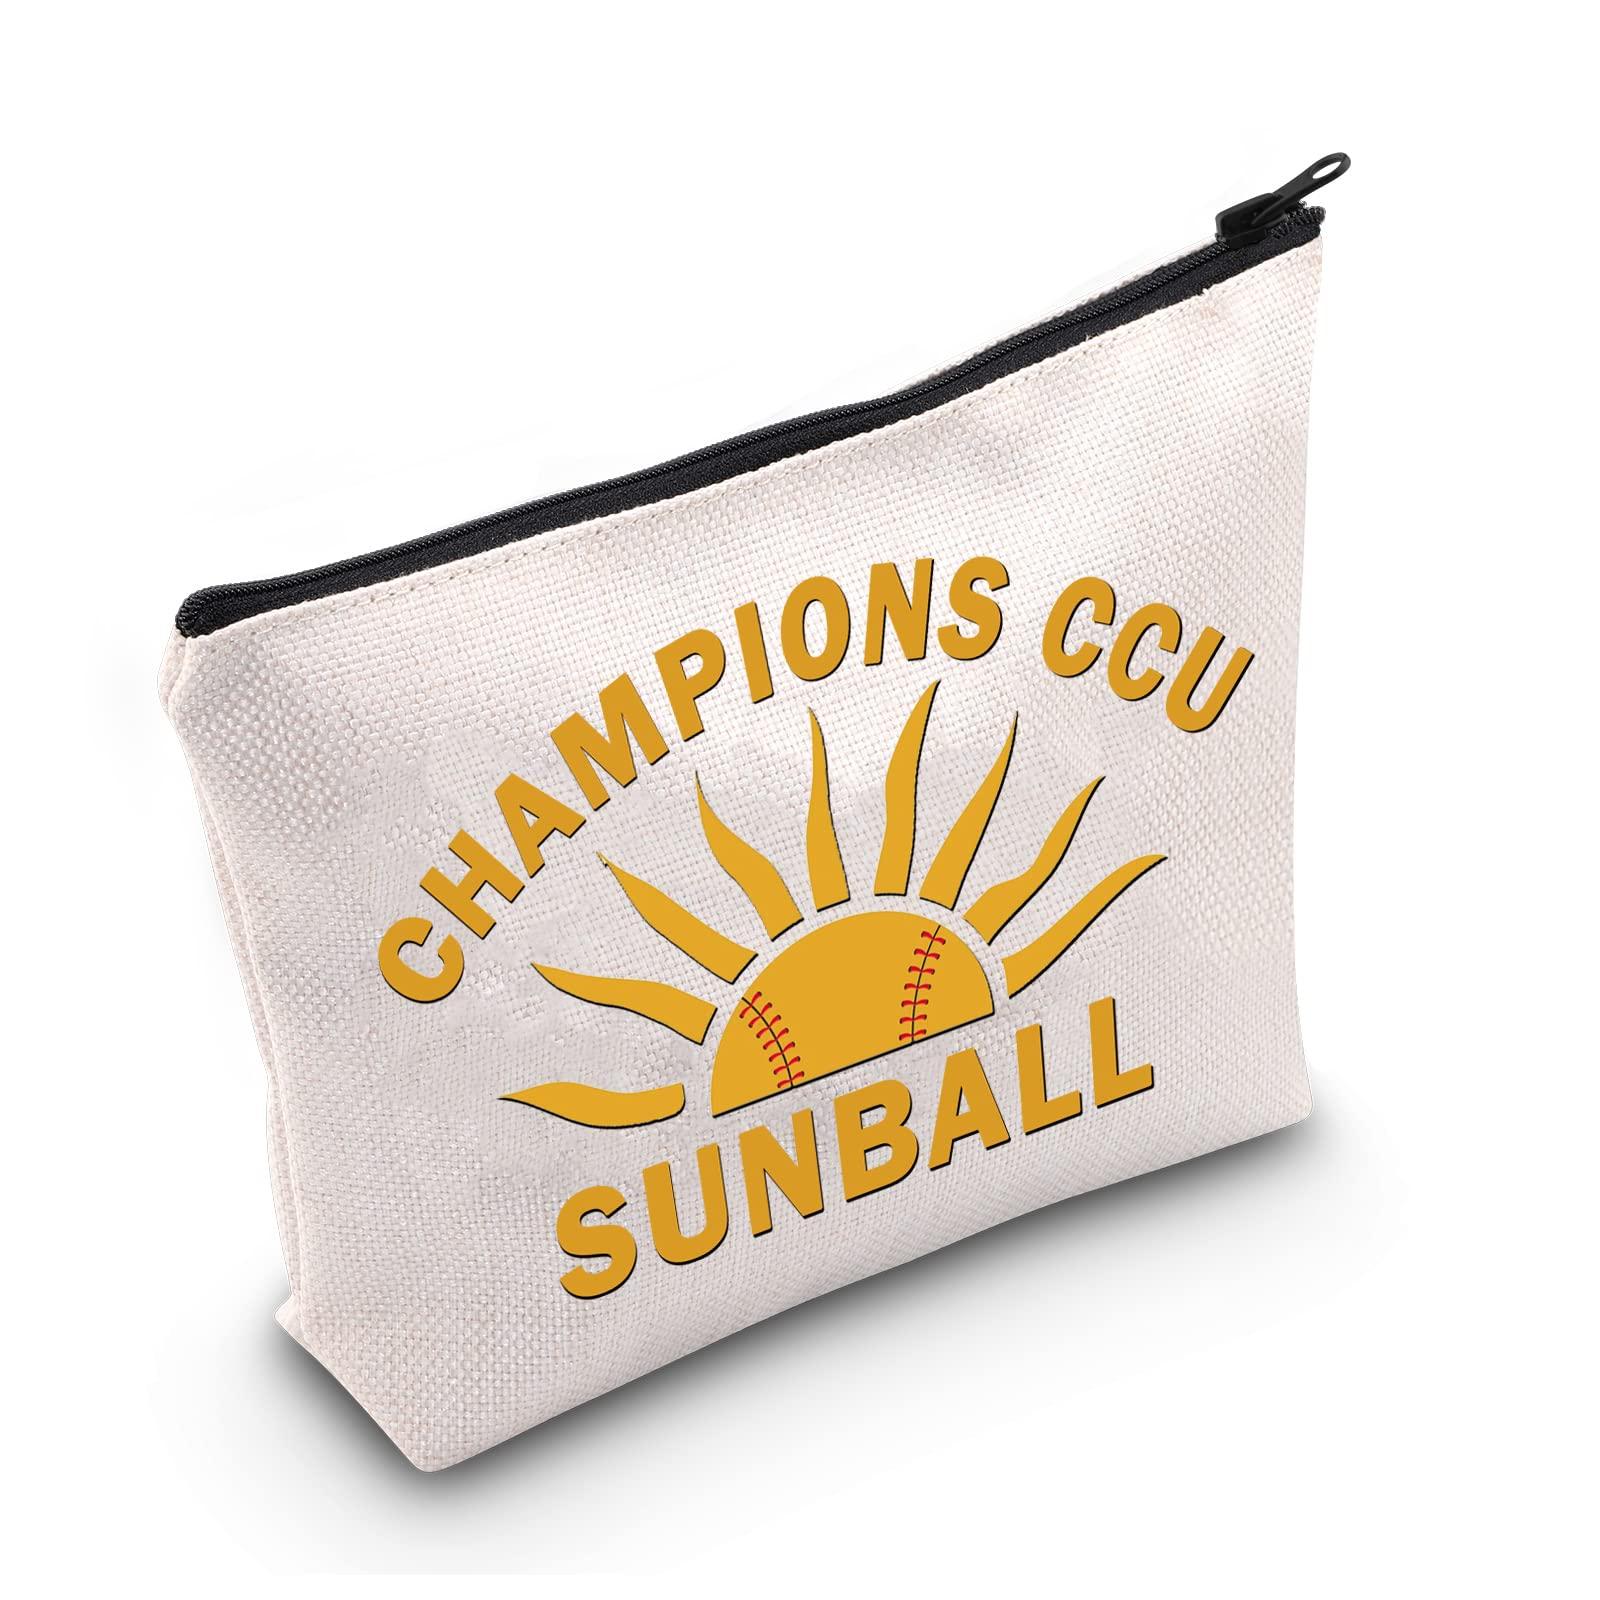 LEVLO Fantasy Novel Series Fans Gift Champions Ccu Sunball Makeup Bag Bookish Travel Waterproof Bruches Zipper Pouch, Ccu Sunball